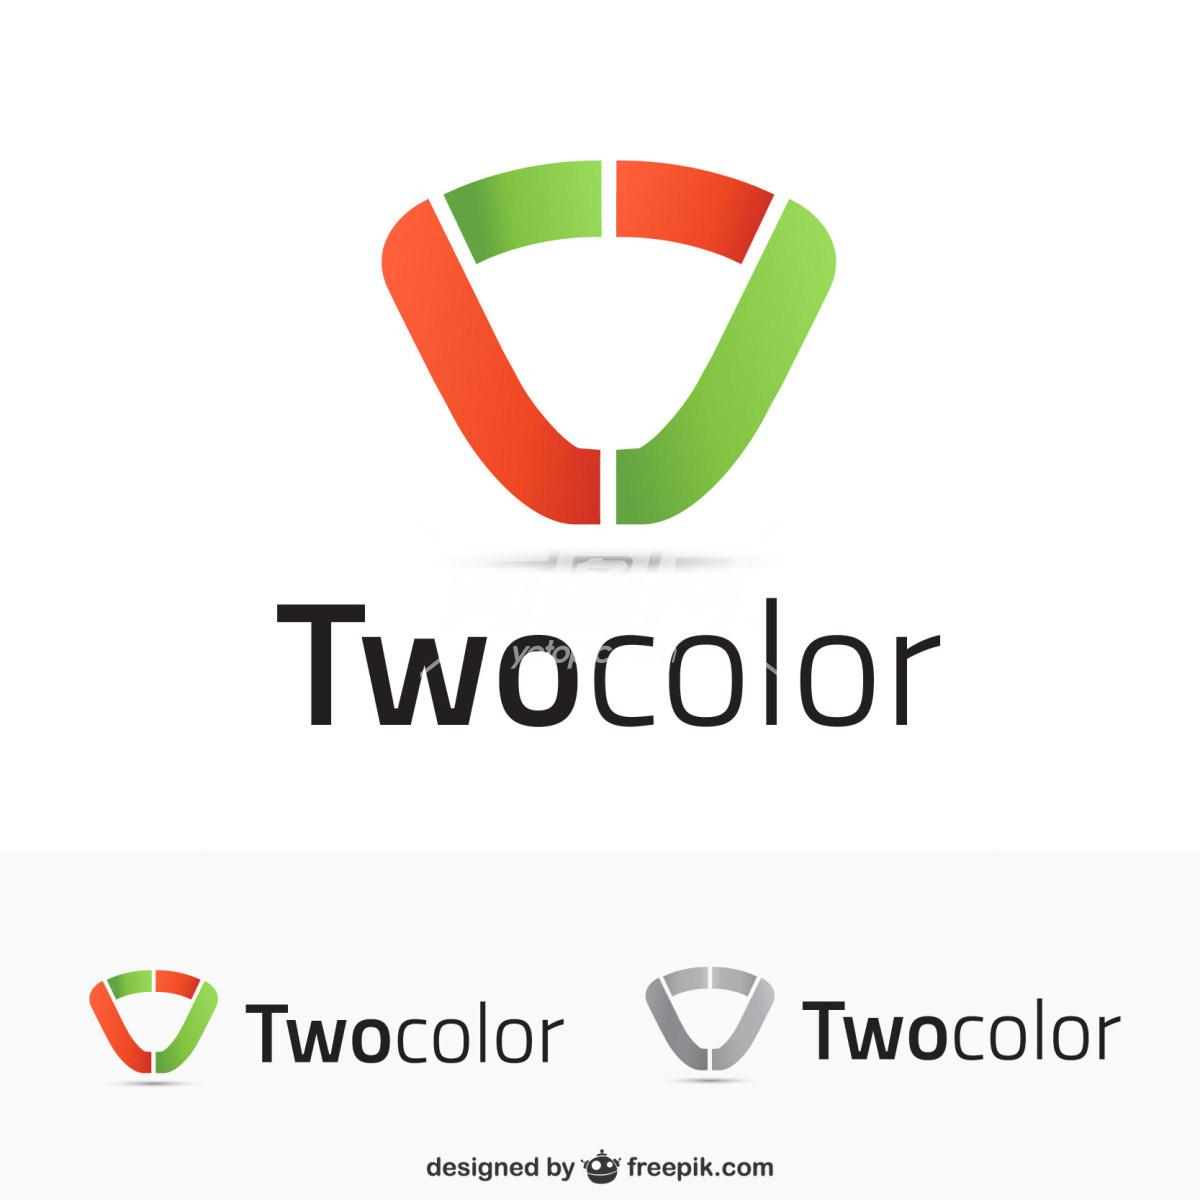 Twocolor